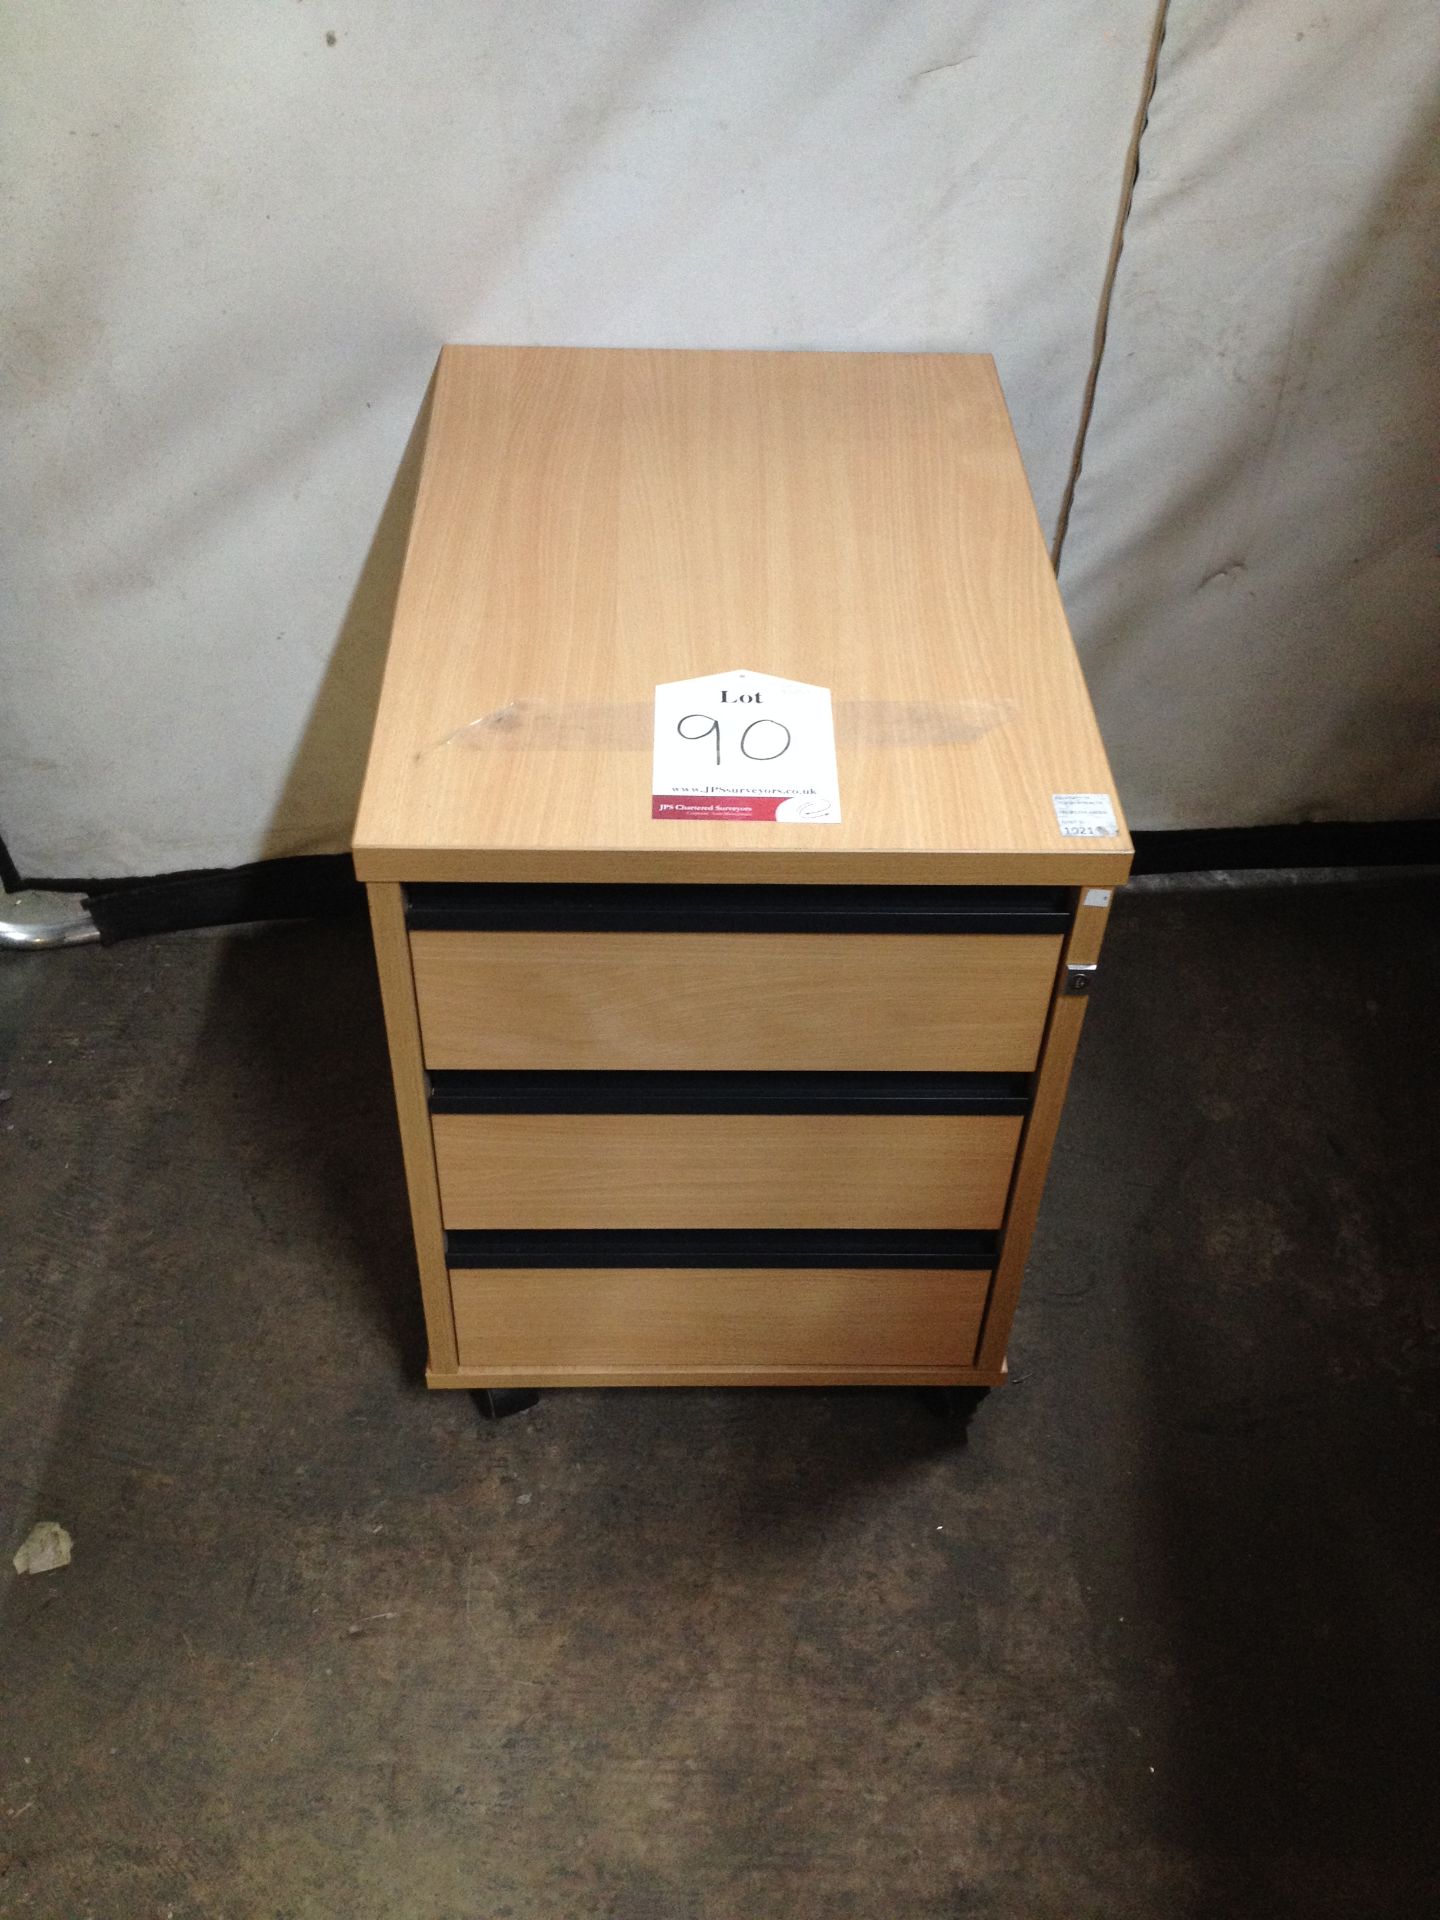 3 Drawer Wooden Filing Cabinet - Image 2 of 2